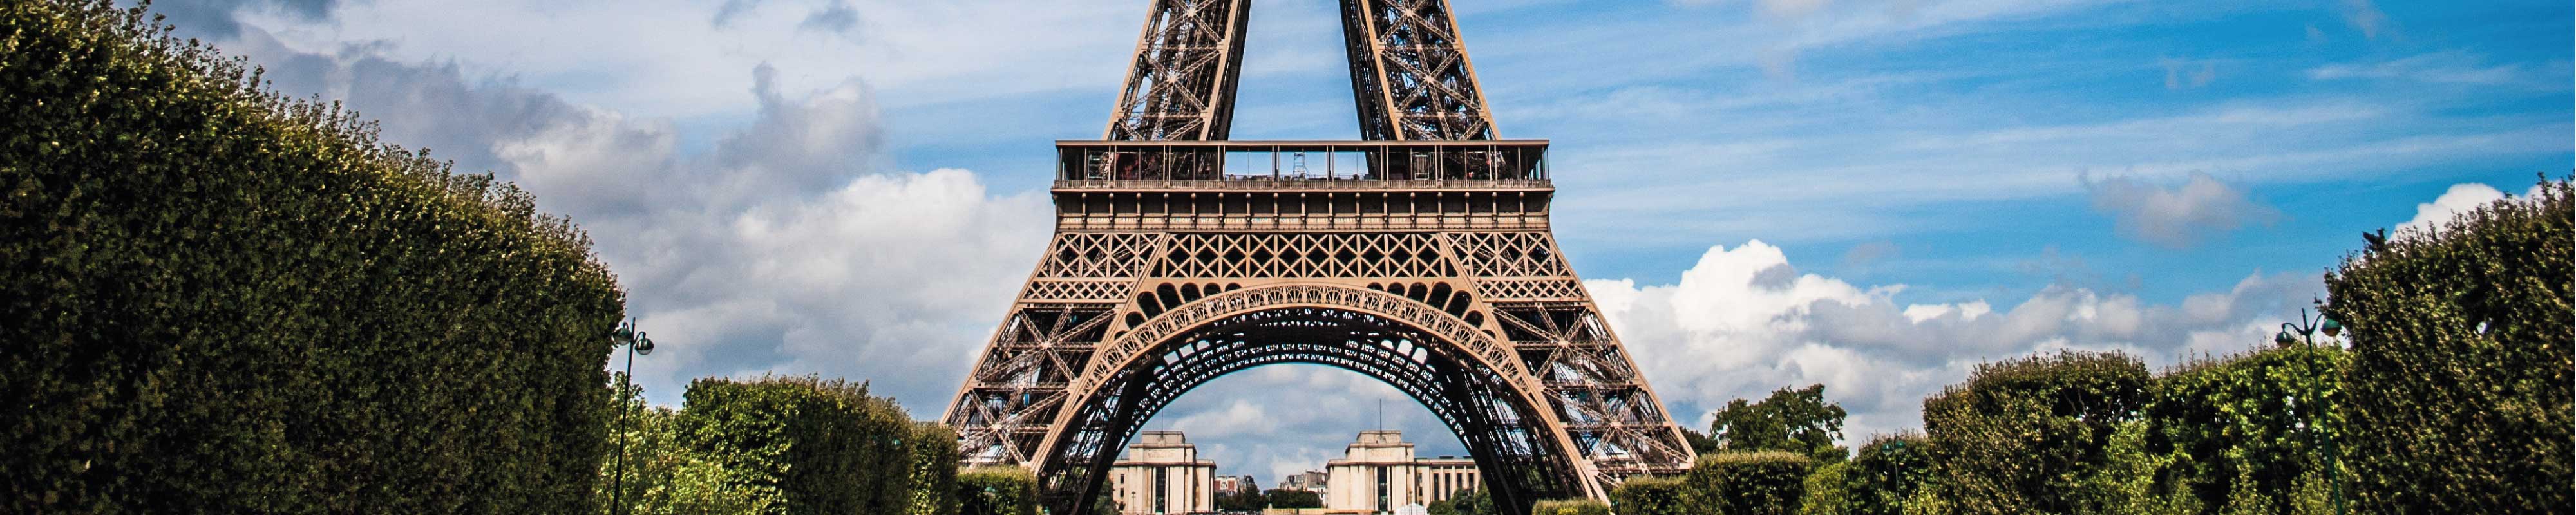 行李寄存 | Tour Eiffel in Paris - Nannybag